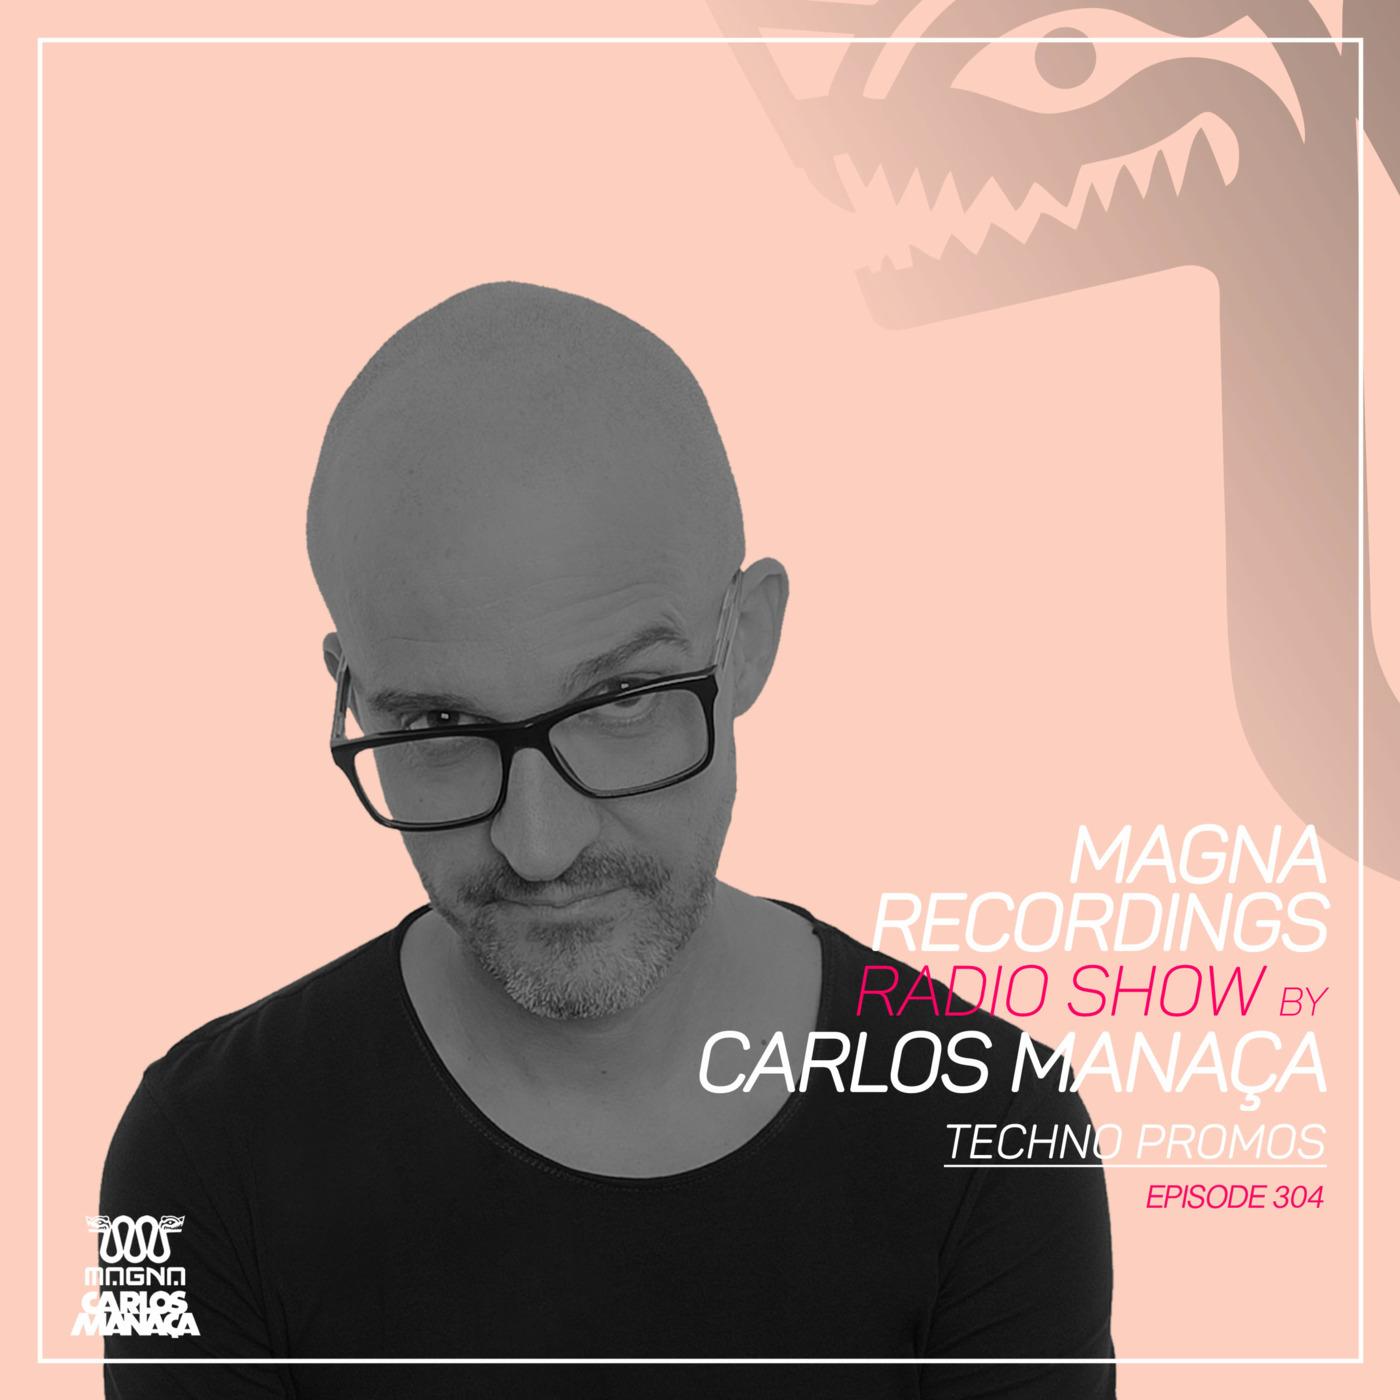 Episode 129: Magna Recordings Radio Show by Carlos Manaça 304 | Techno Promos